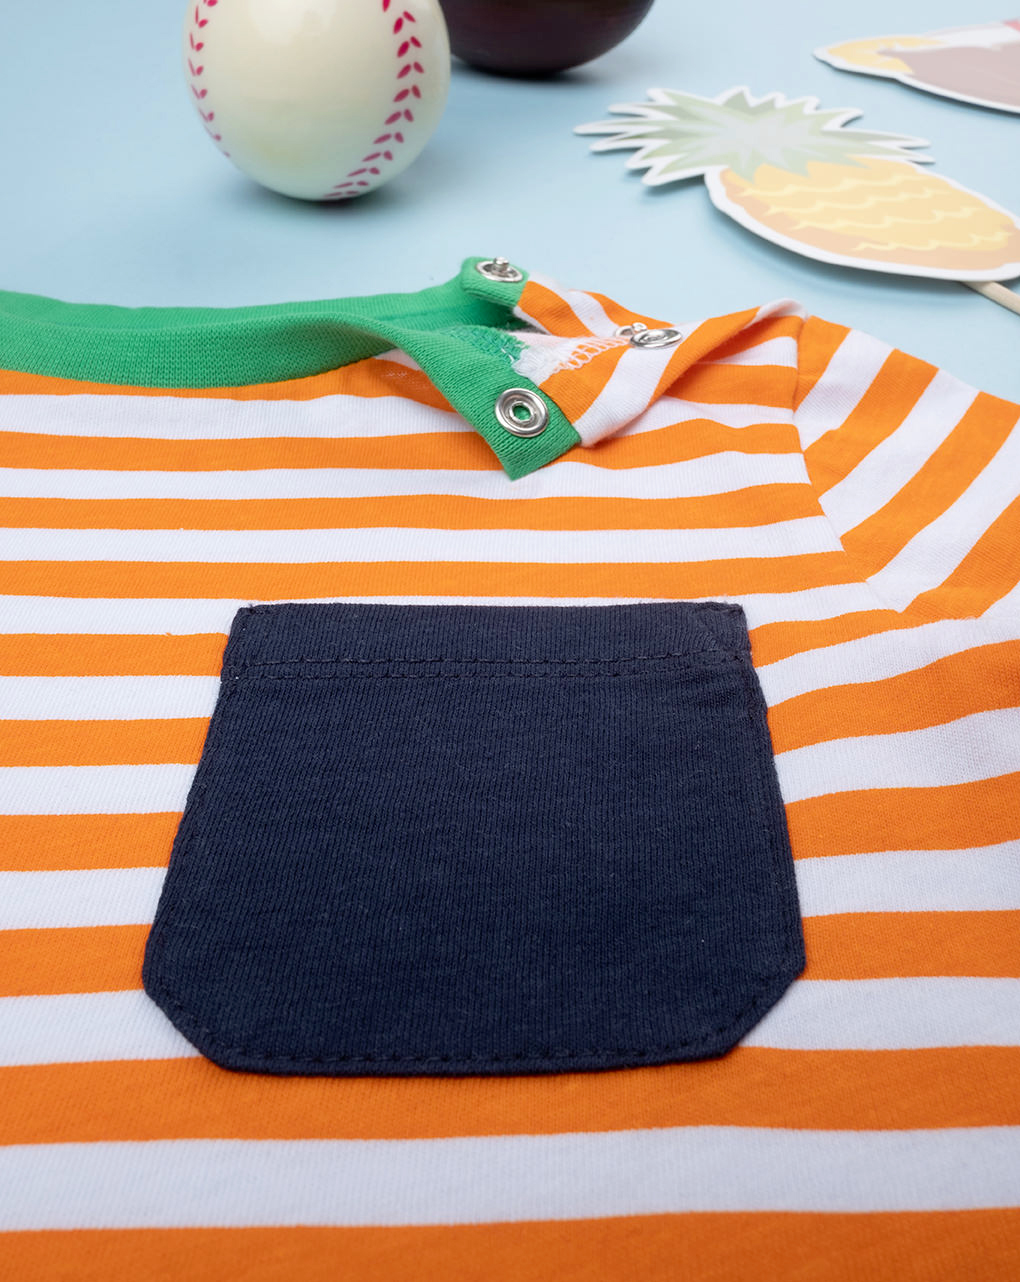 Camiseta a rayas bebé blanco/naranja - Prénatal